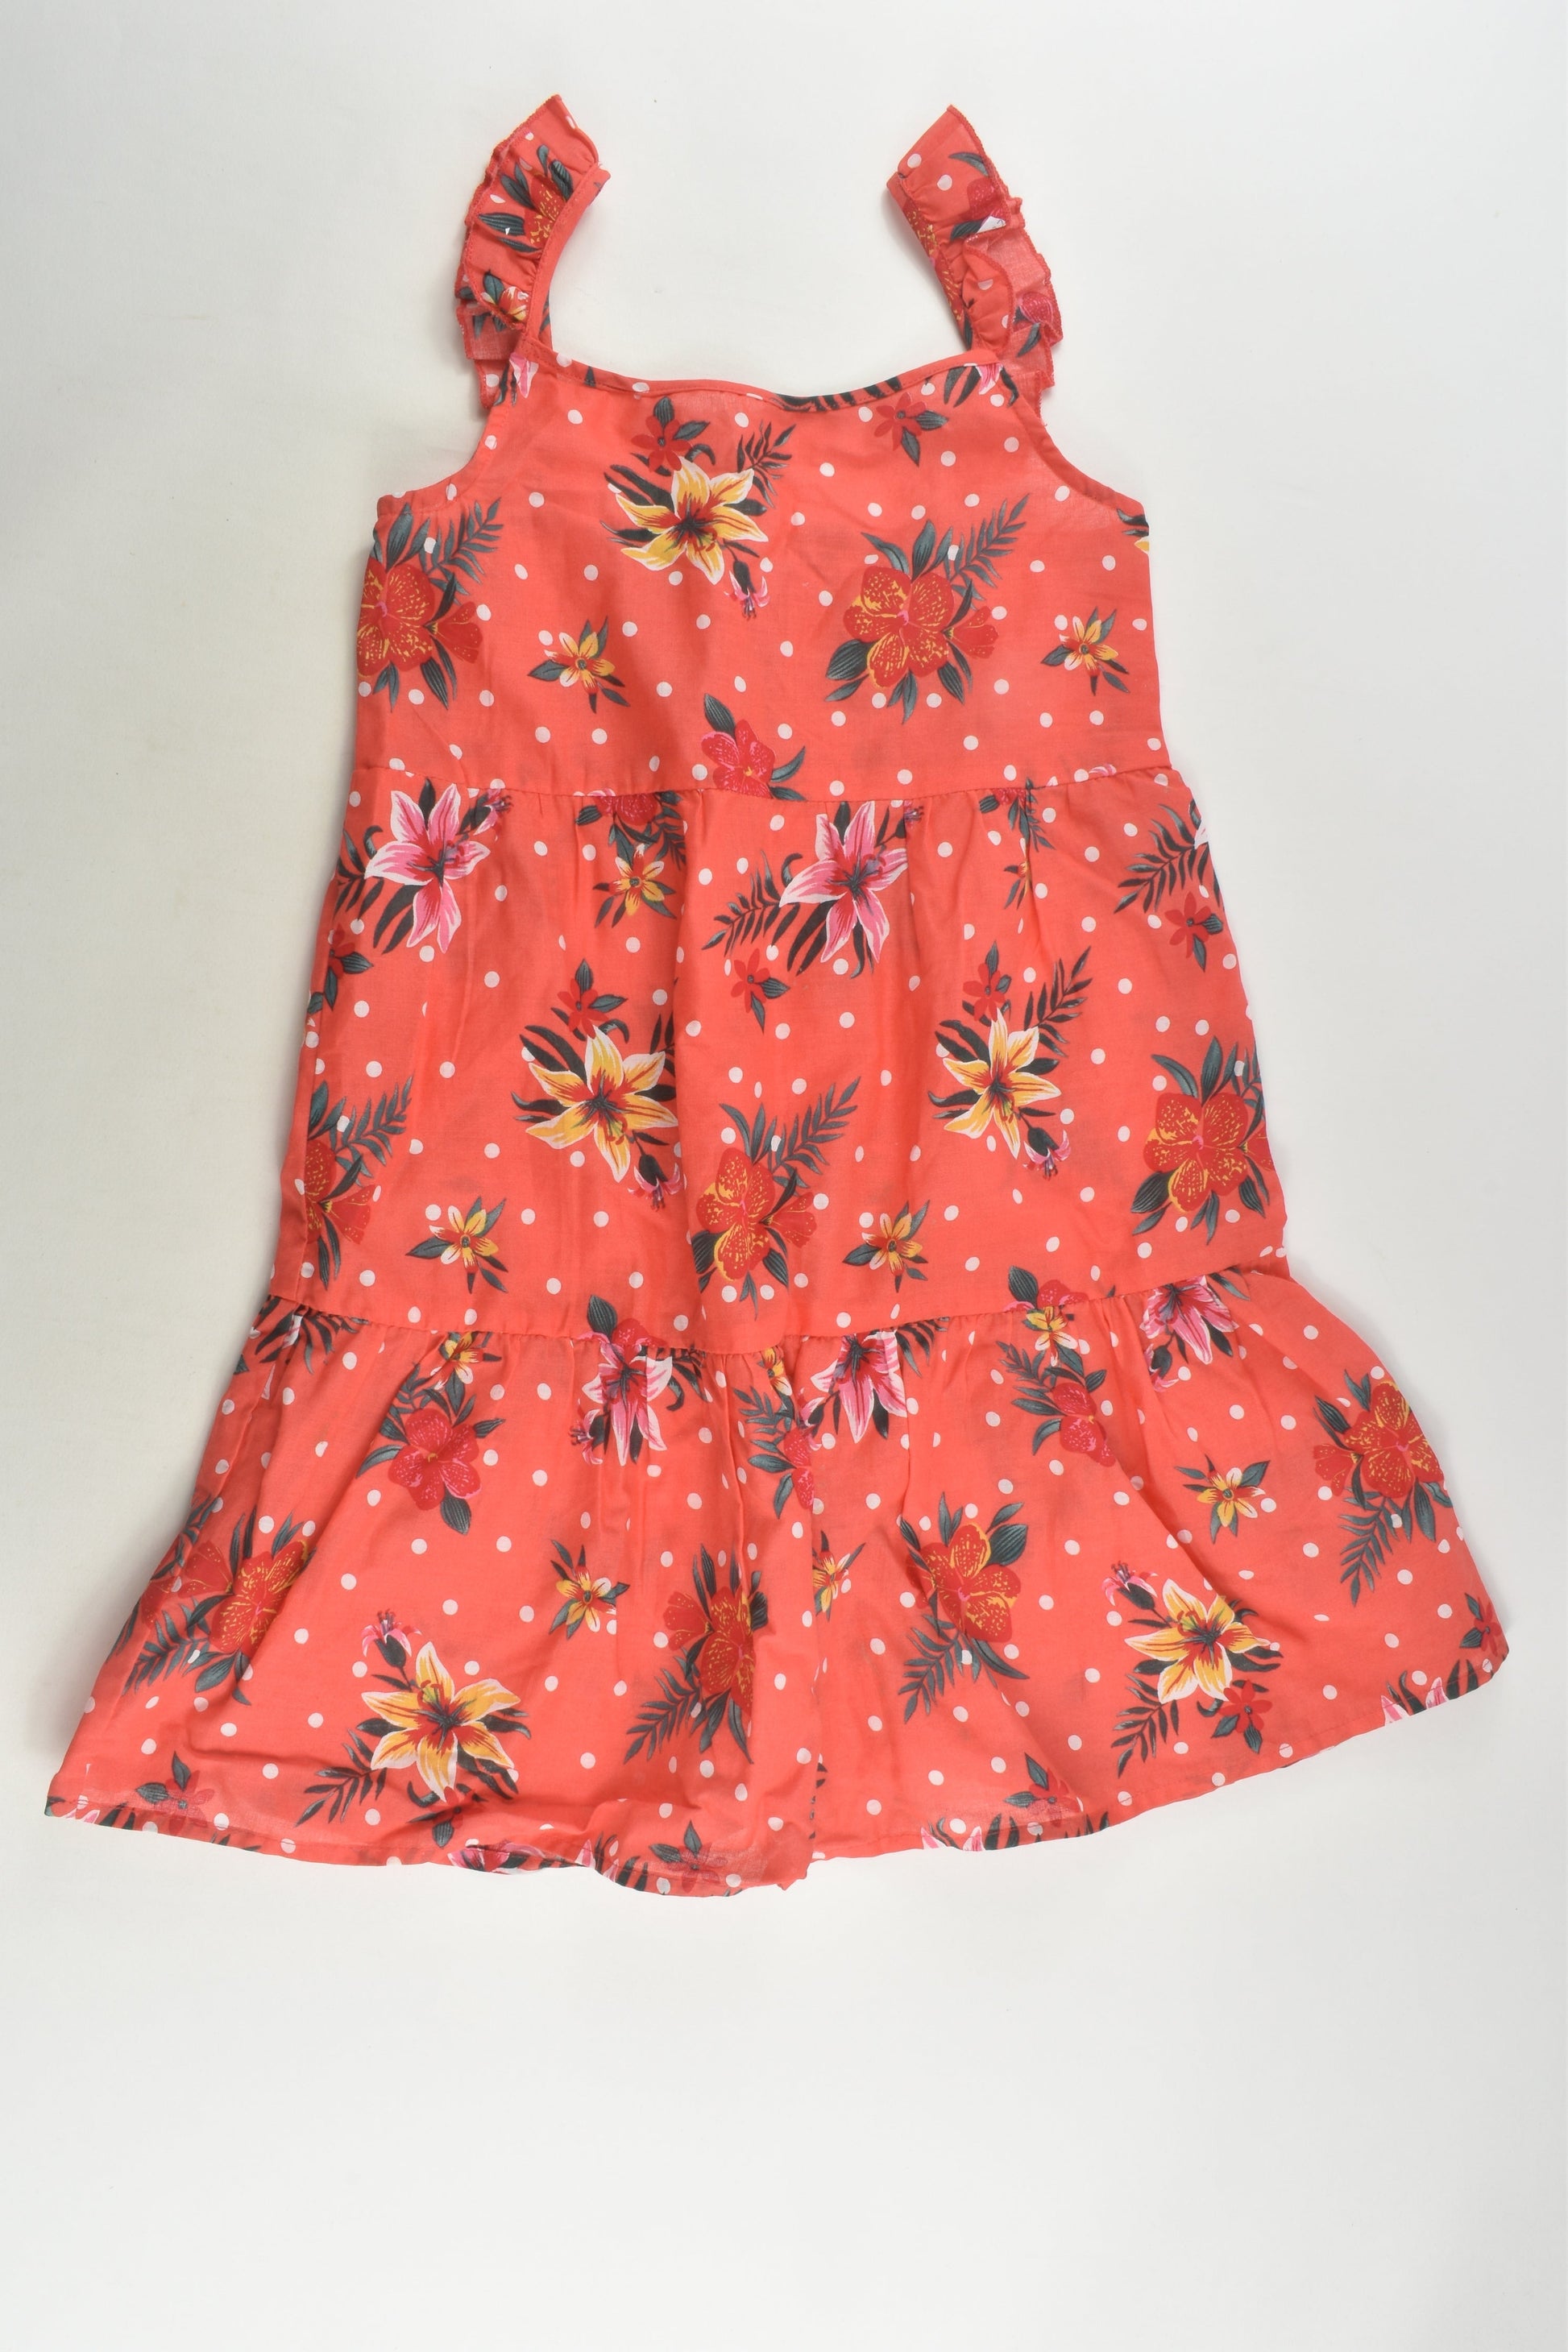 Primark Size 6-7 (122 cm) Dress